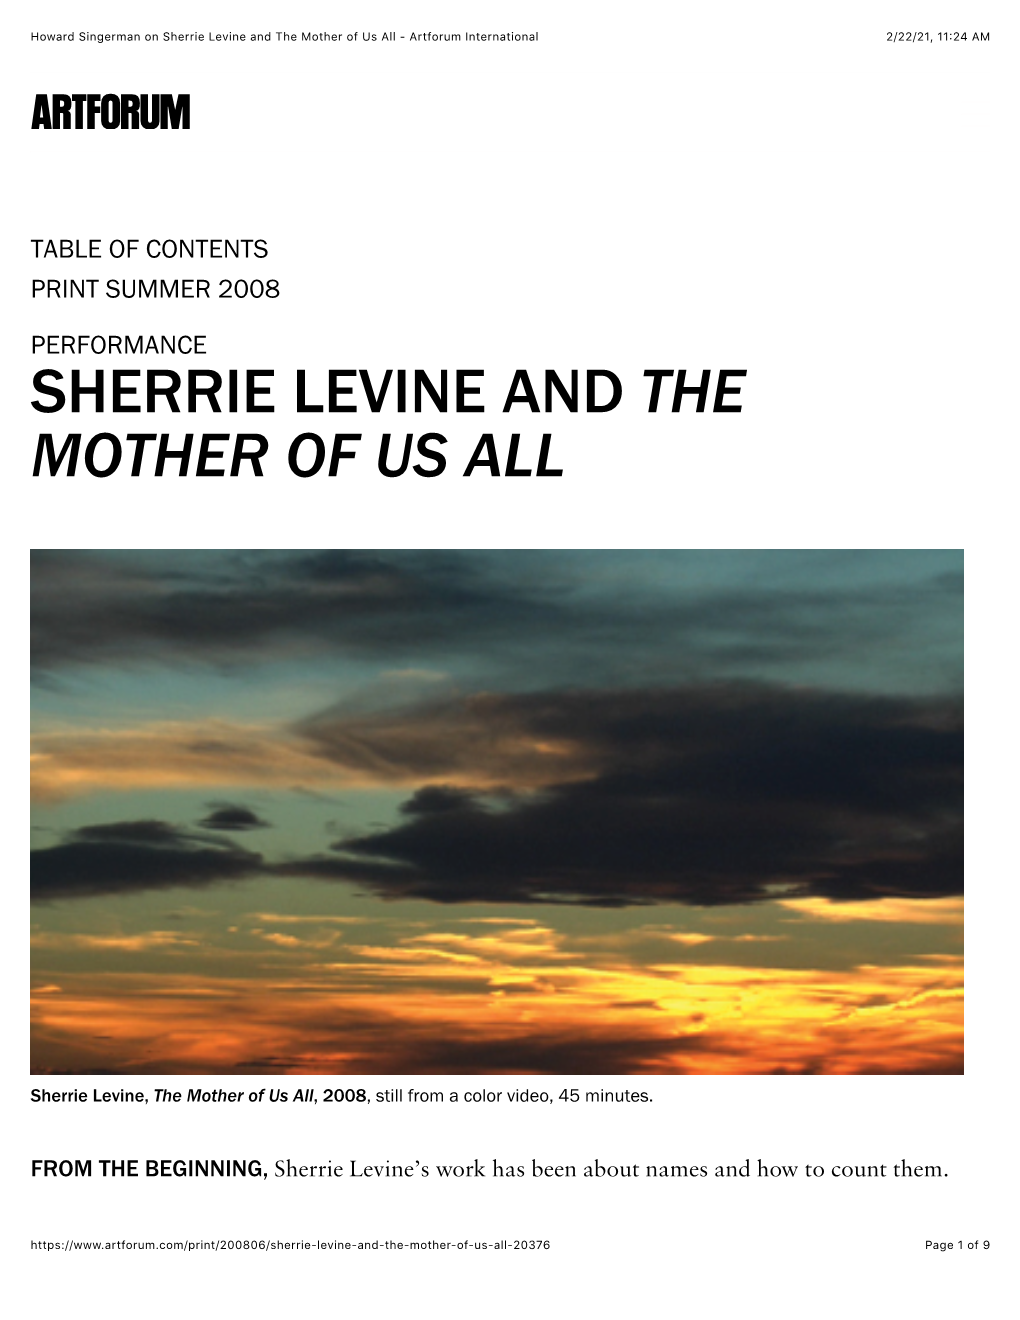 Howard Singerman on Sherrie Levine and the Mother of Us All - Artforum International 2/22/21, 11:24 AM